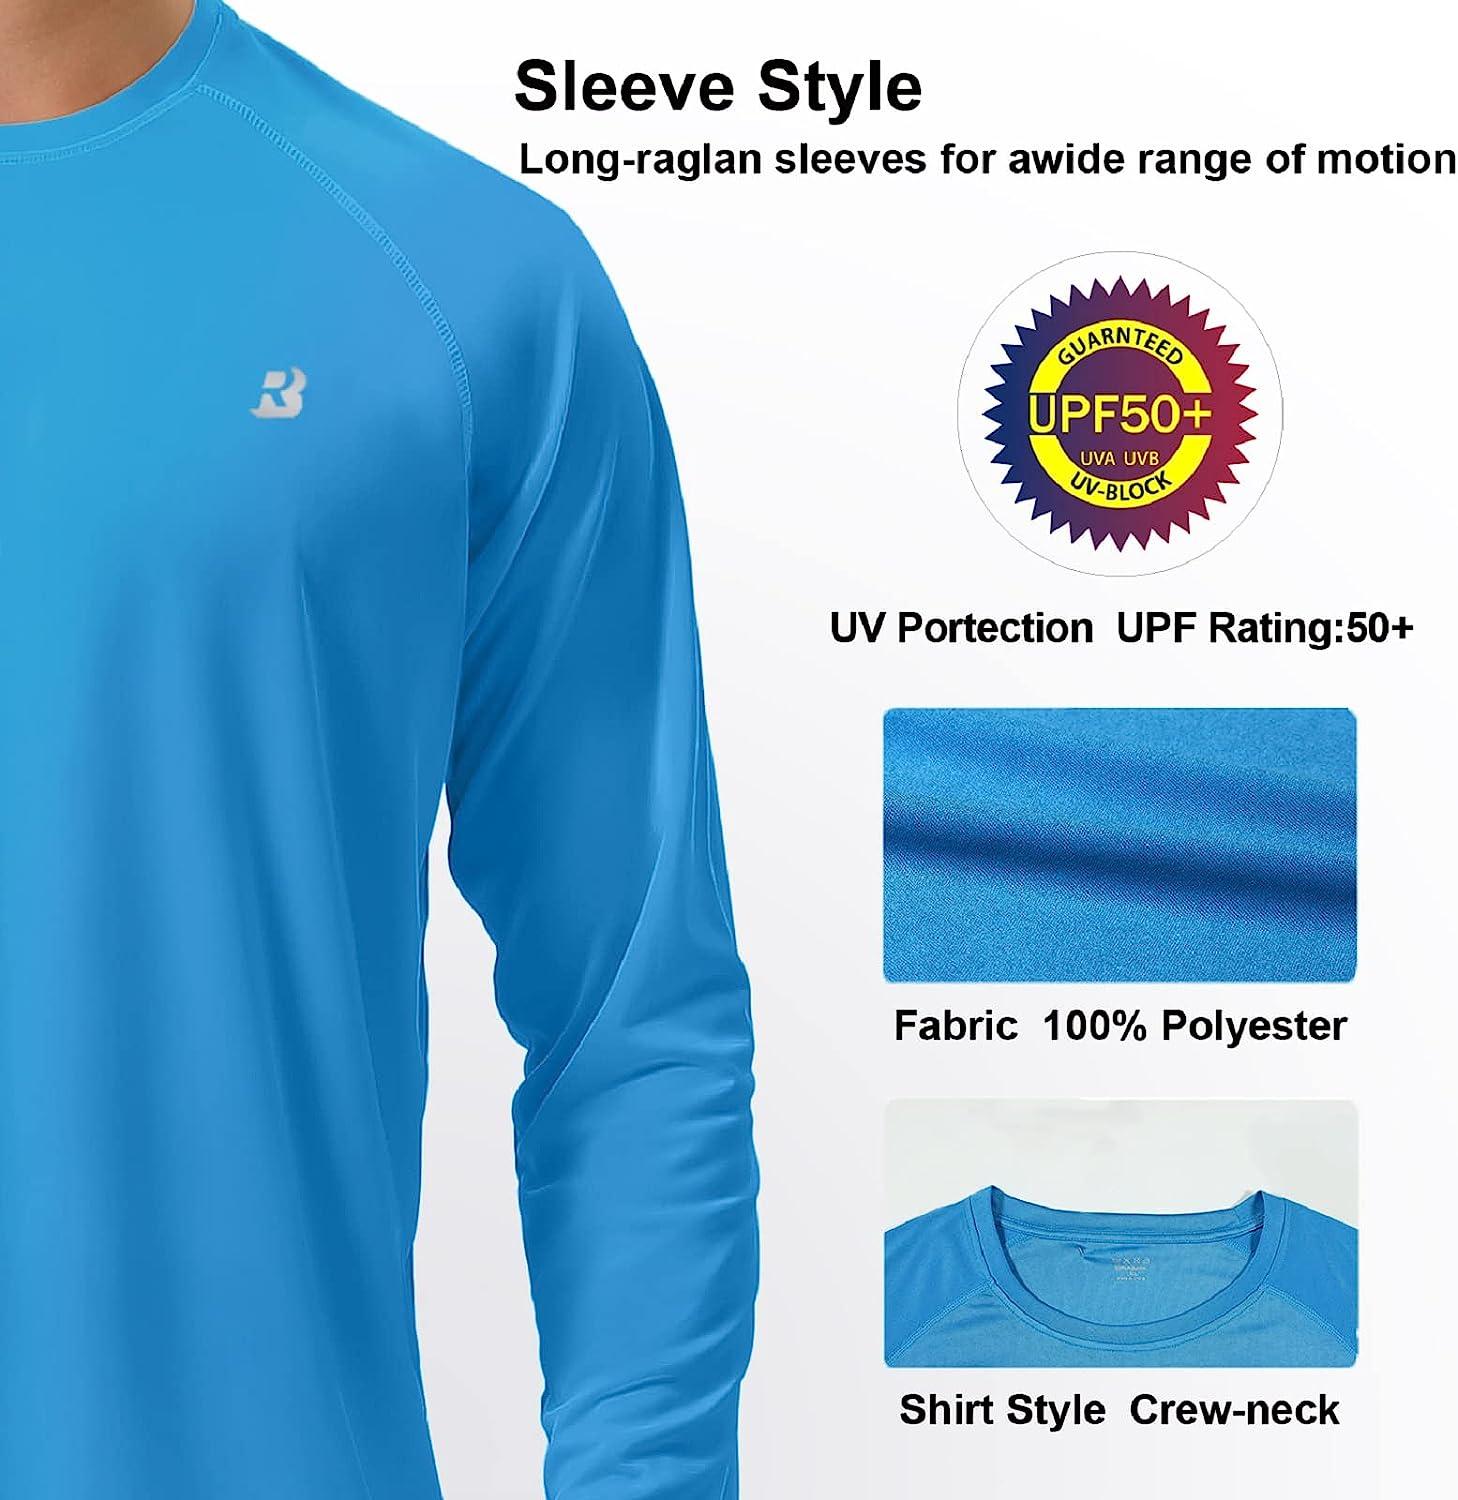 Roadbox Mens UPF 50+ UV Sun Protection Shirts Outdoor Long Sleeve Fishing T- Shirt for Hiking Swimming Rash Guard Campanula Blue Large